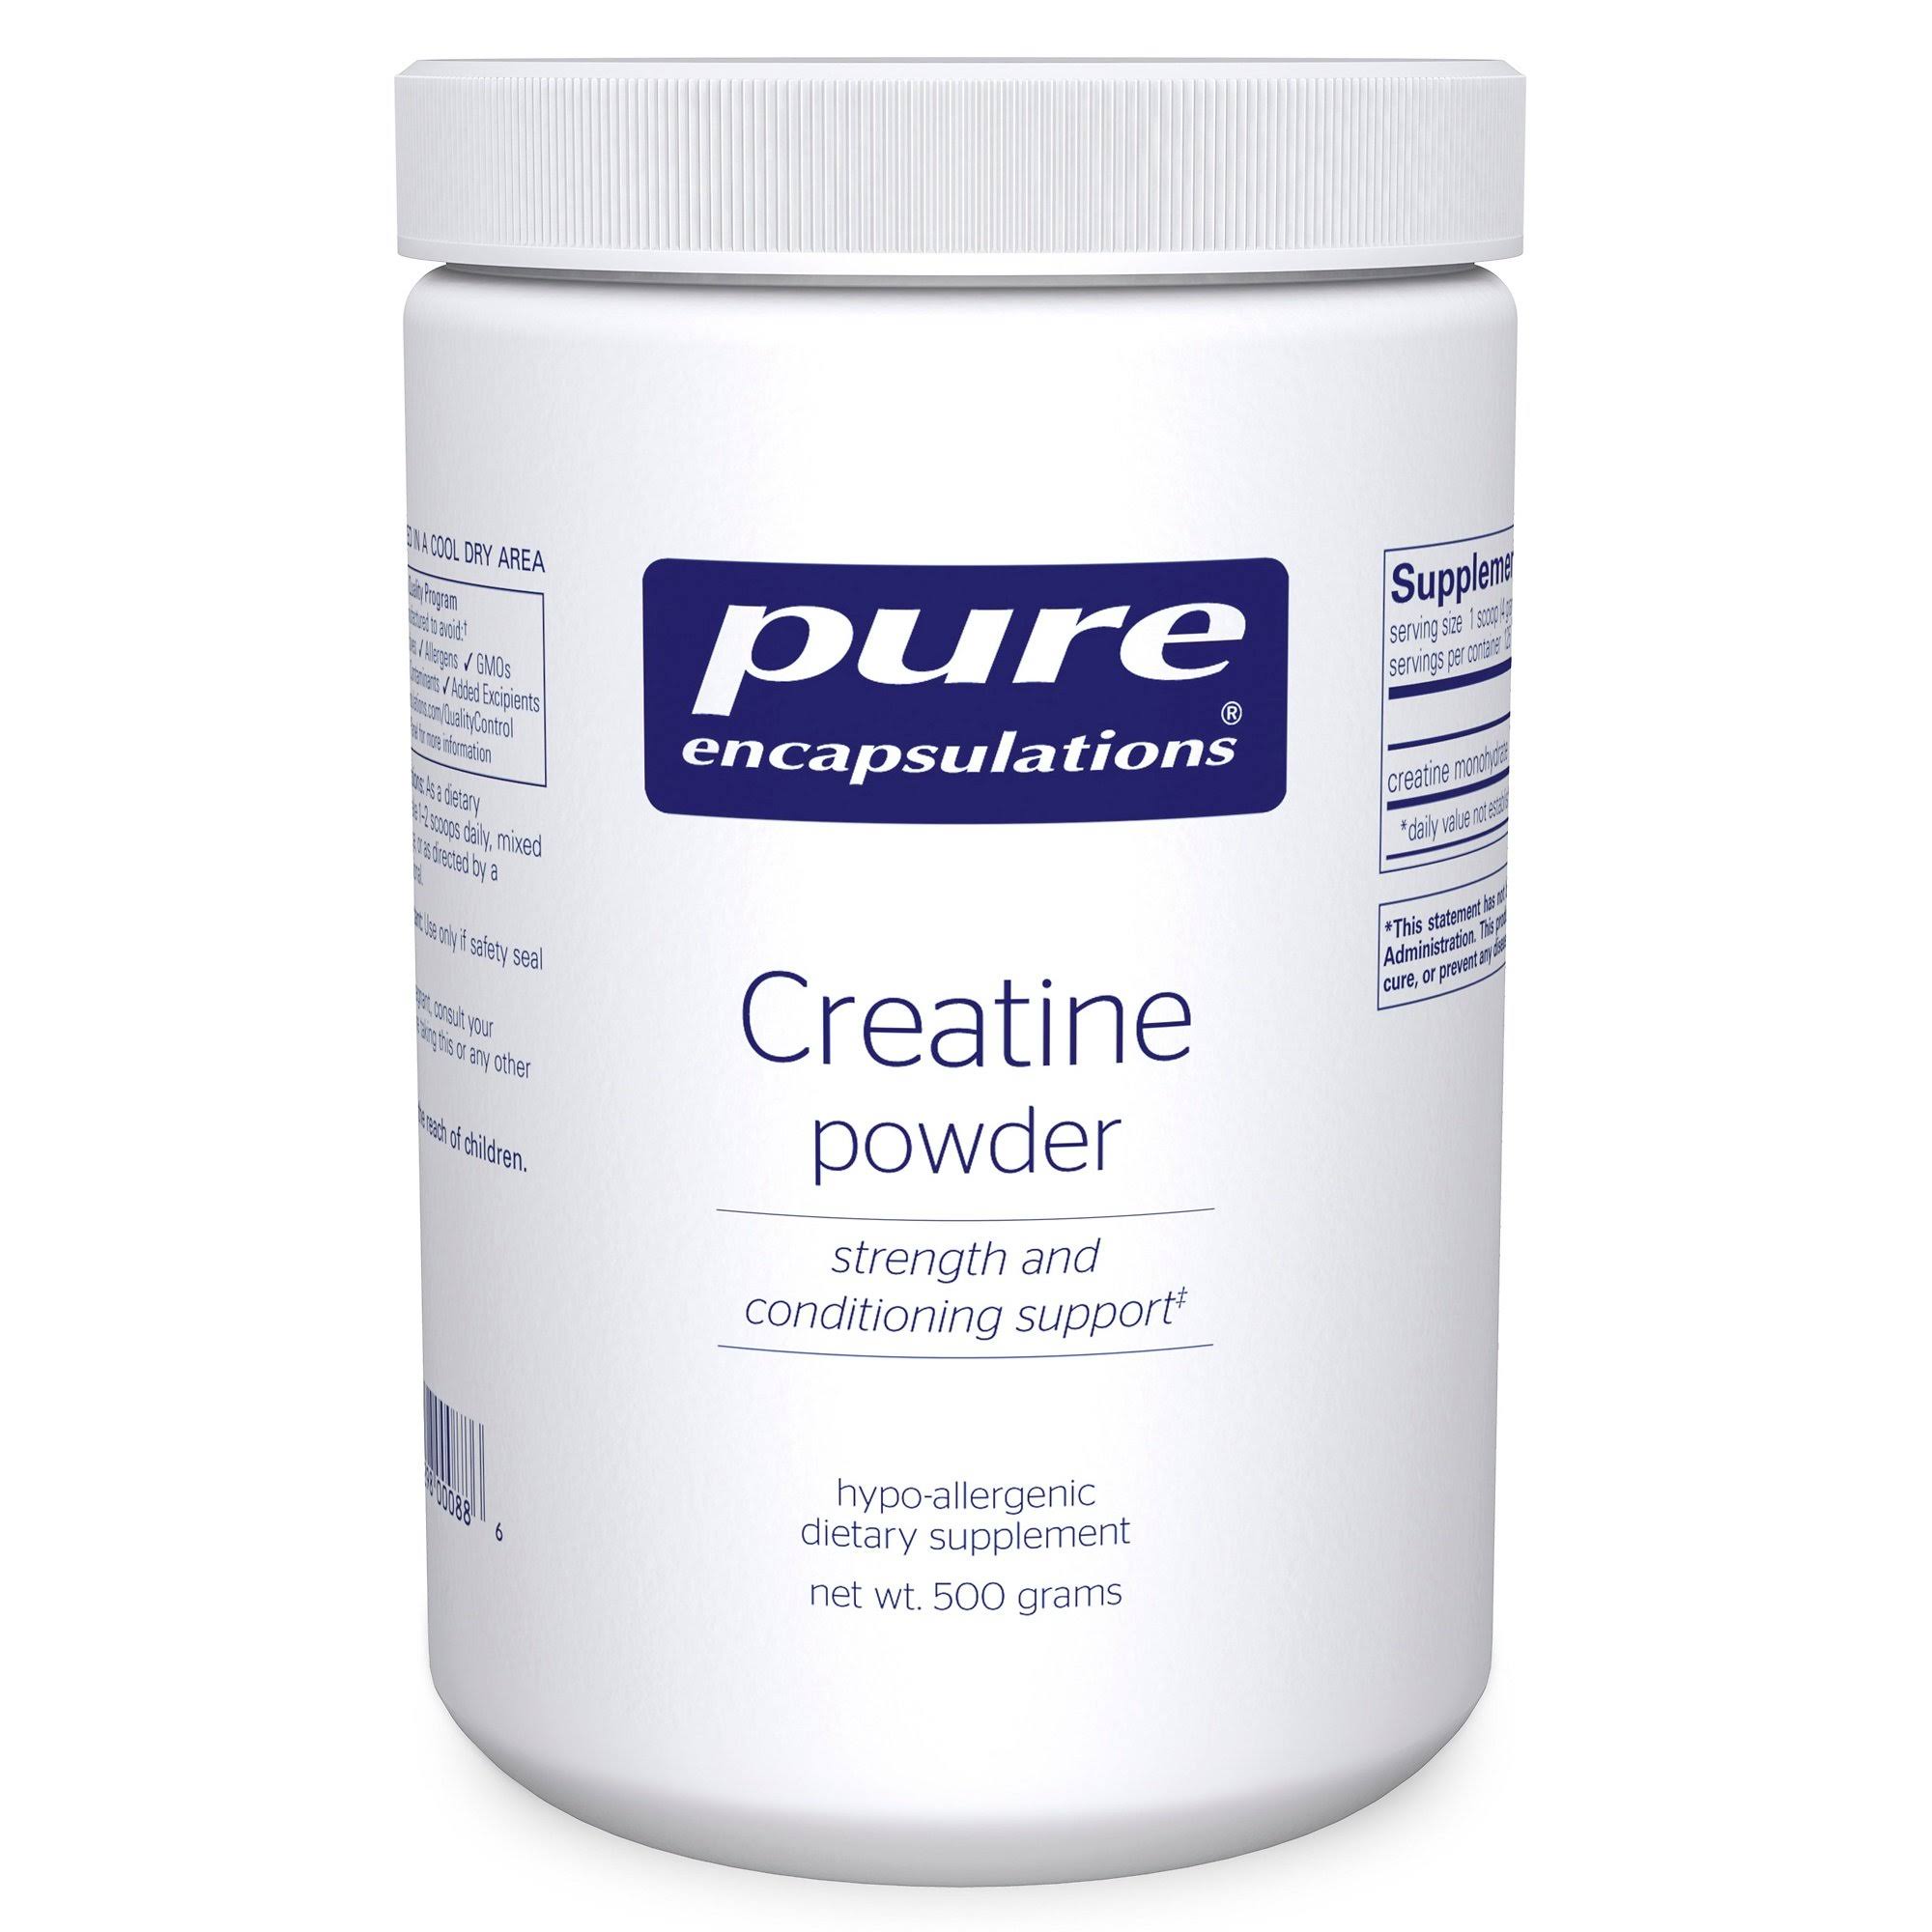 Pure Encapsulations Creatine Powder Supplement - 500g